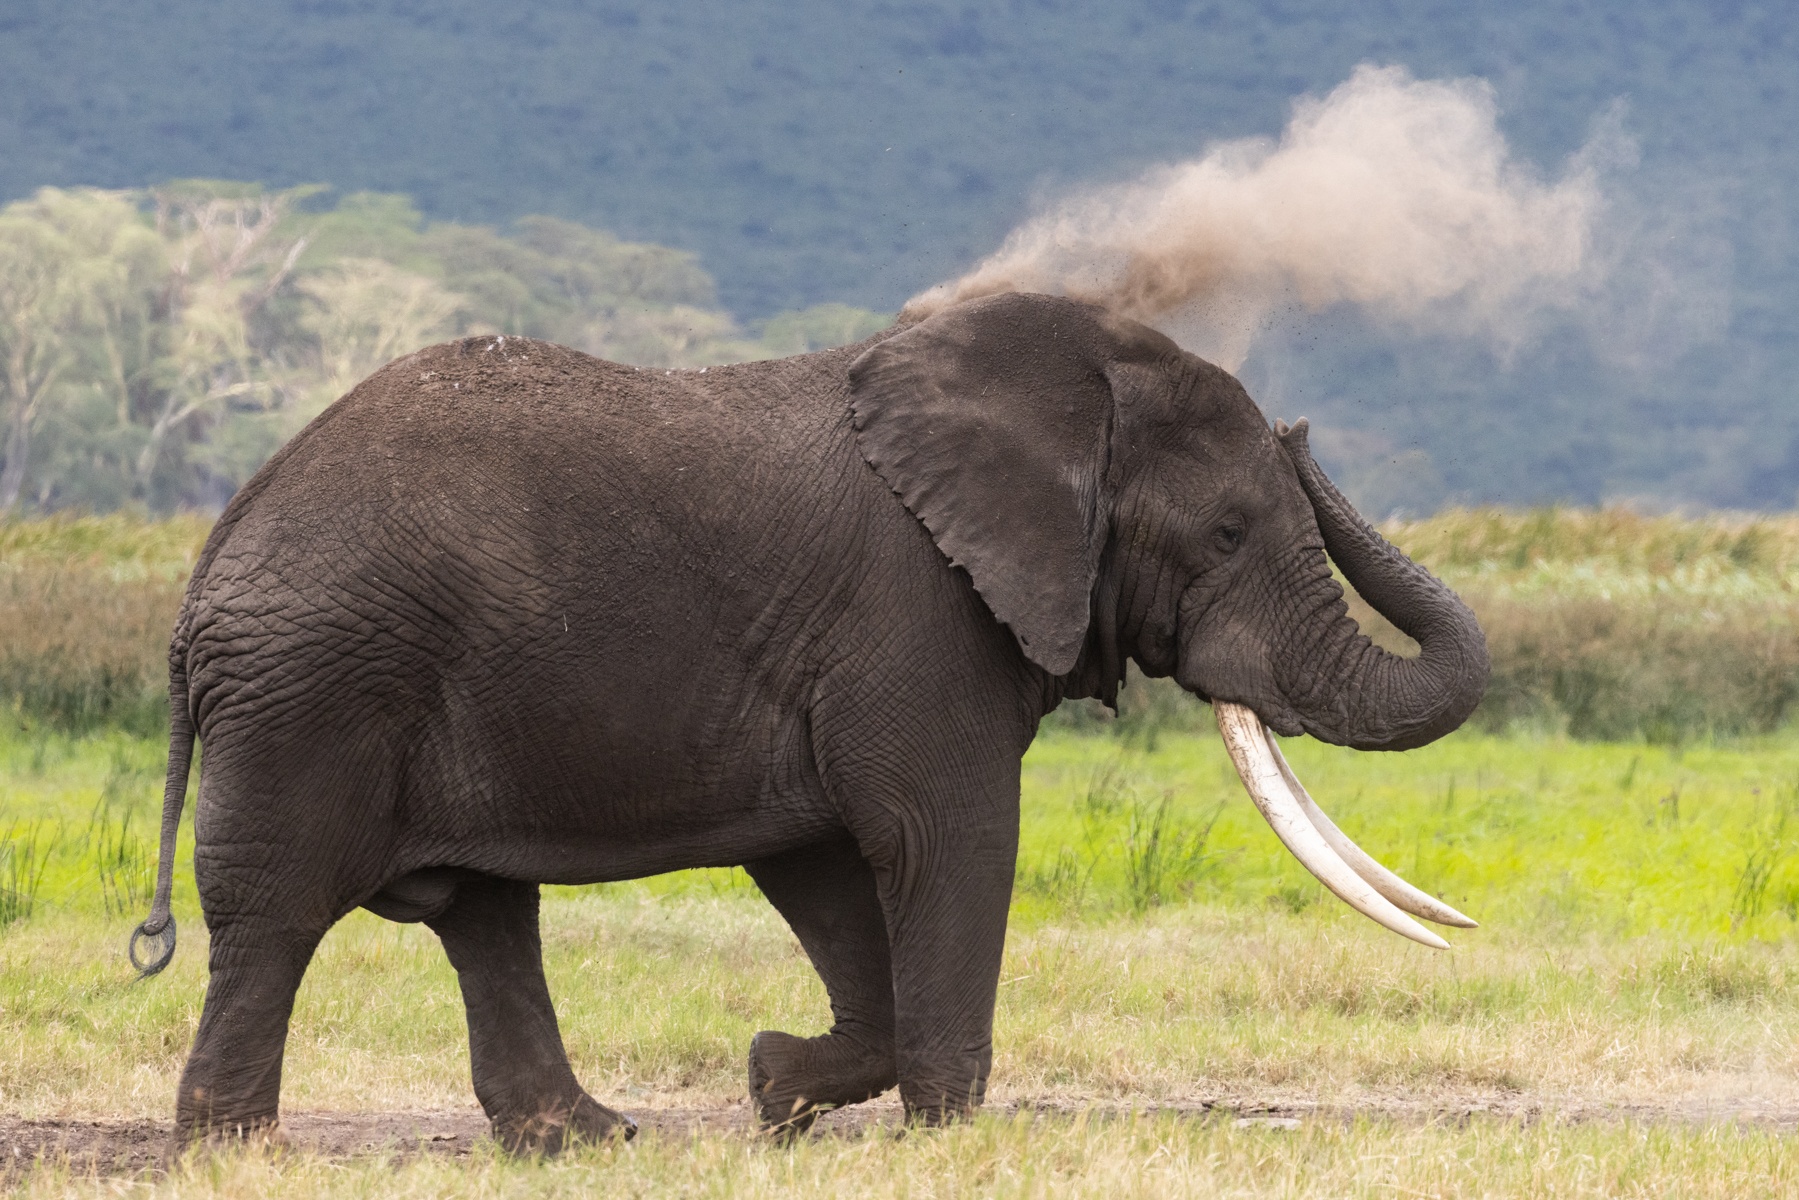 A large male elephant taking a dust bath in Ngorongoro